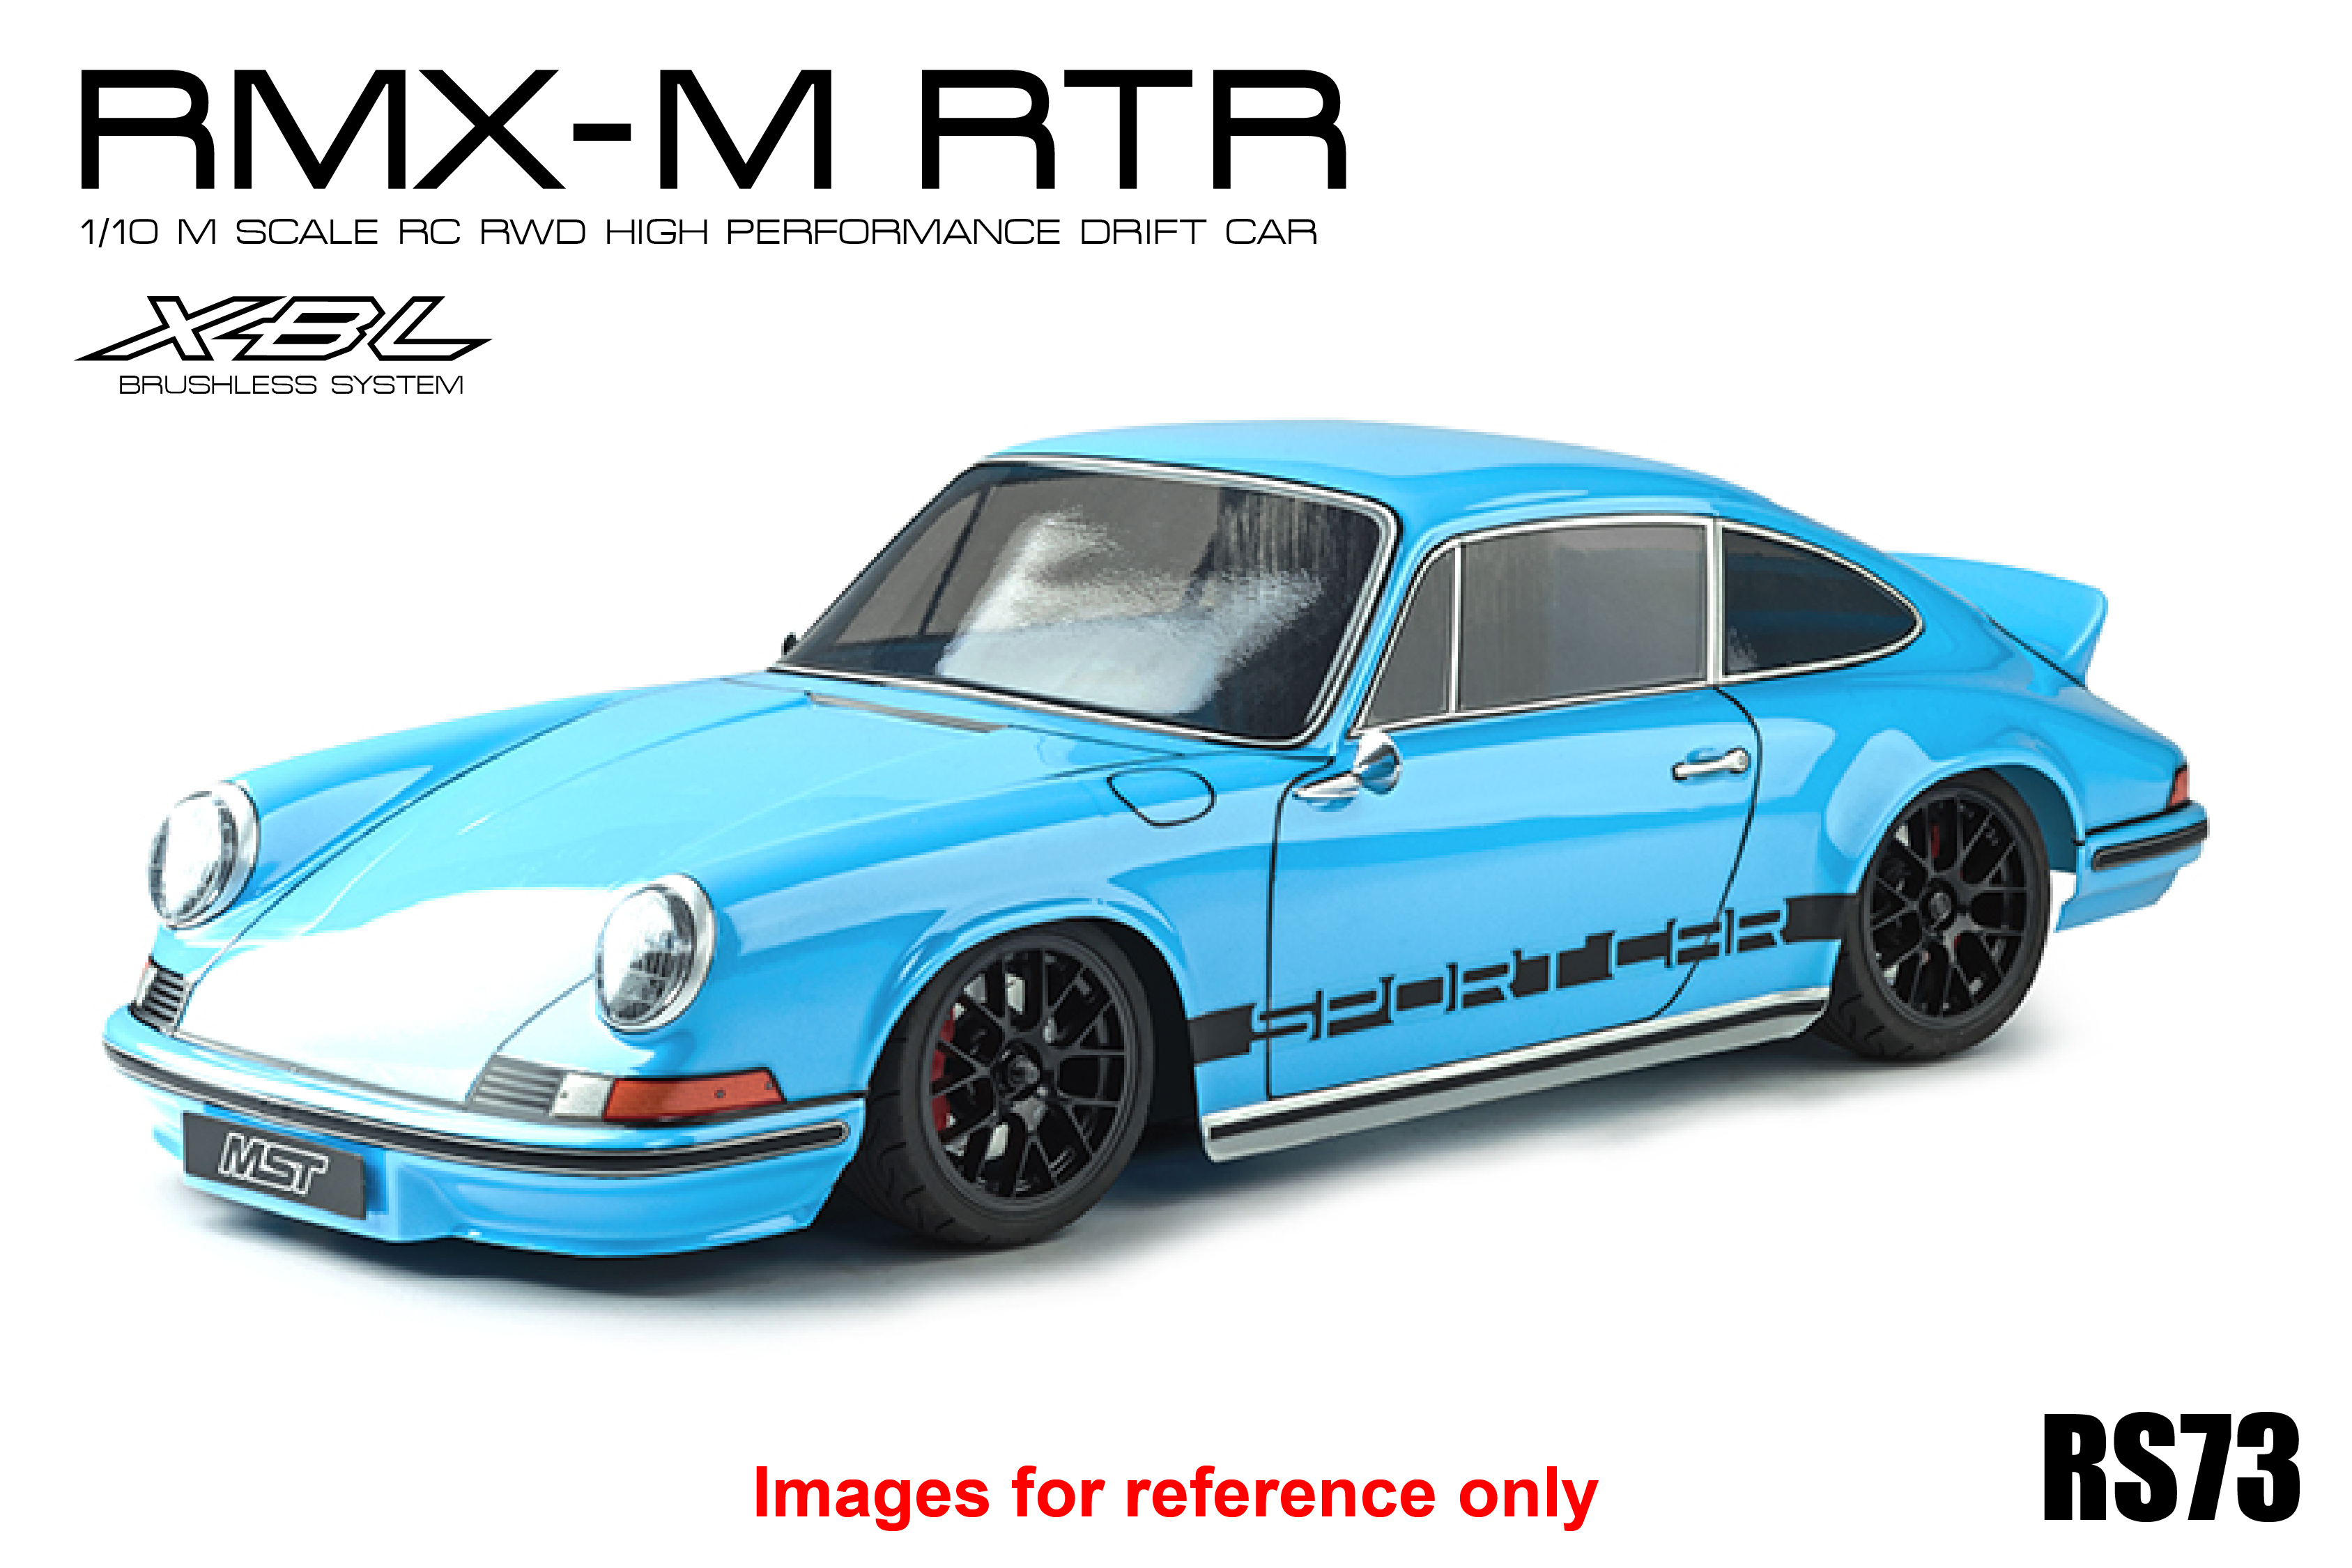 Kayhobbies - Onlineshop für RC Cars - Drift - Crawler - MST RMX-M RTR RS73  (light blue) (brushless)